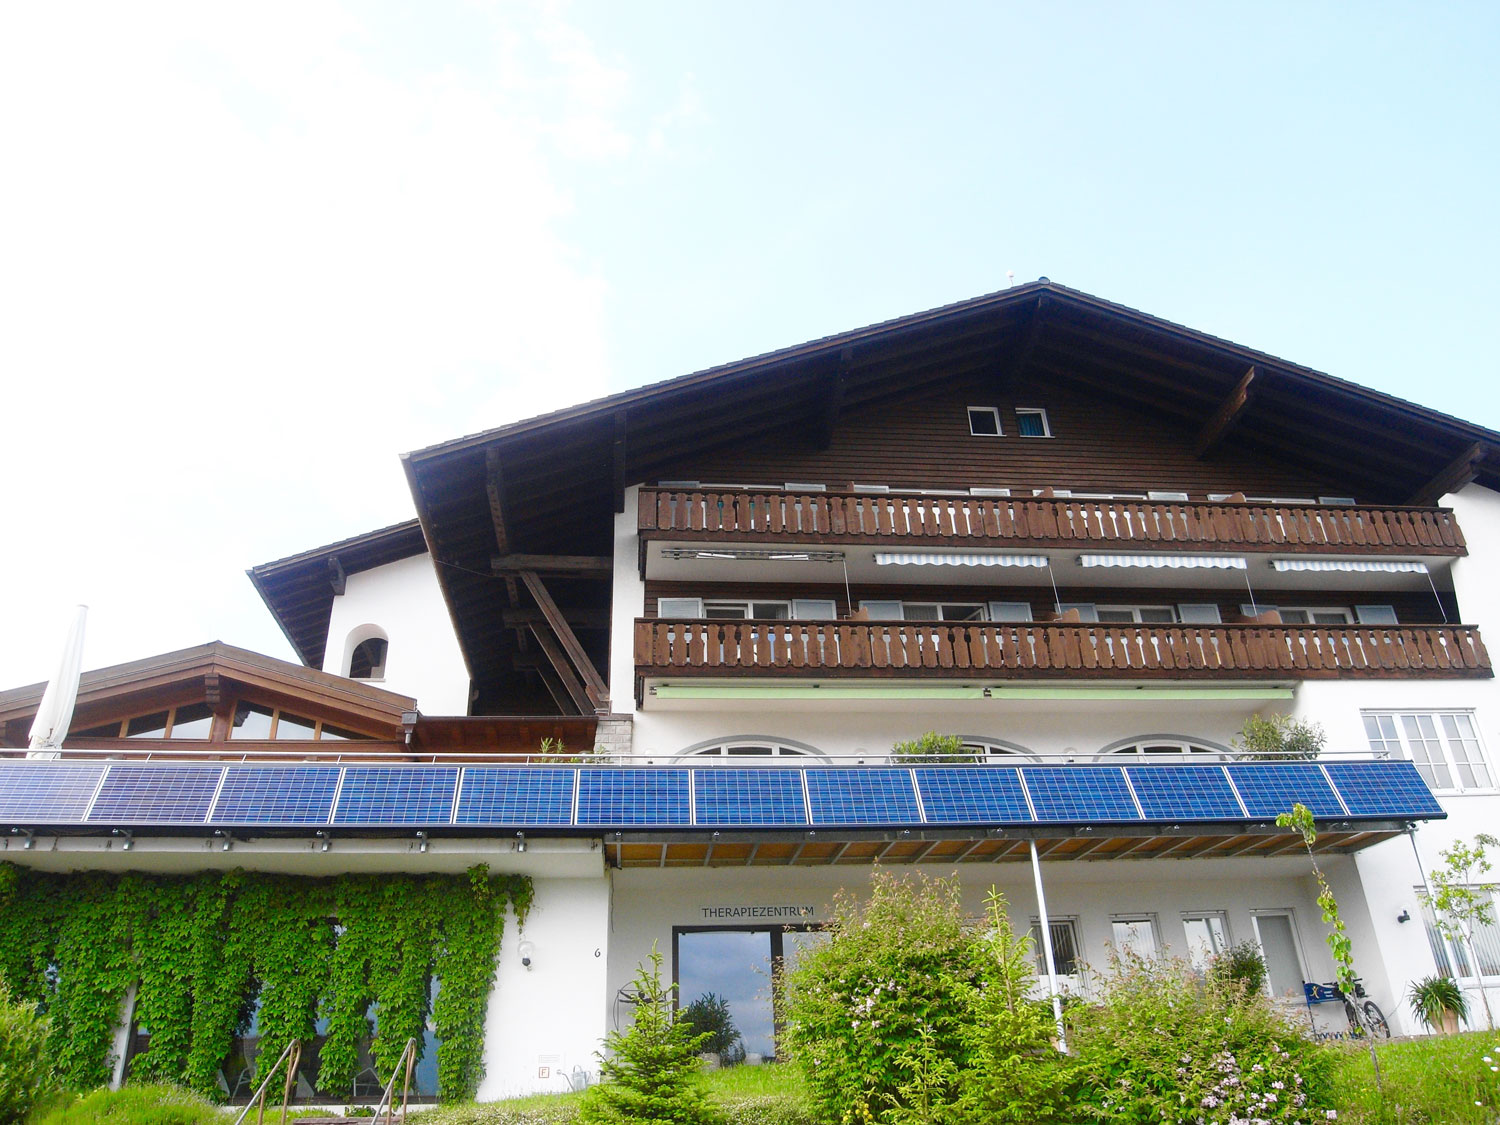 Eggensberger Biohotel Fussenの建物、ひさし部分の太陽光パネル。オーナー自ら設置したそう。（Photography: Mayuko Nakaishi）